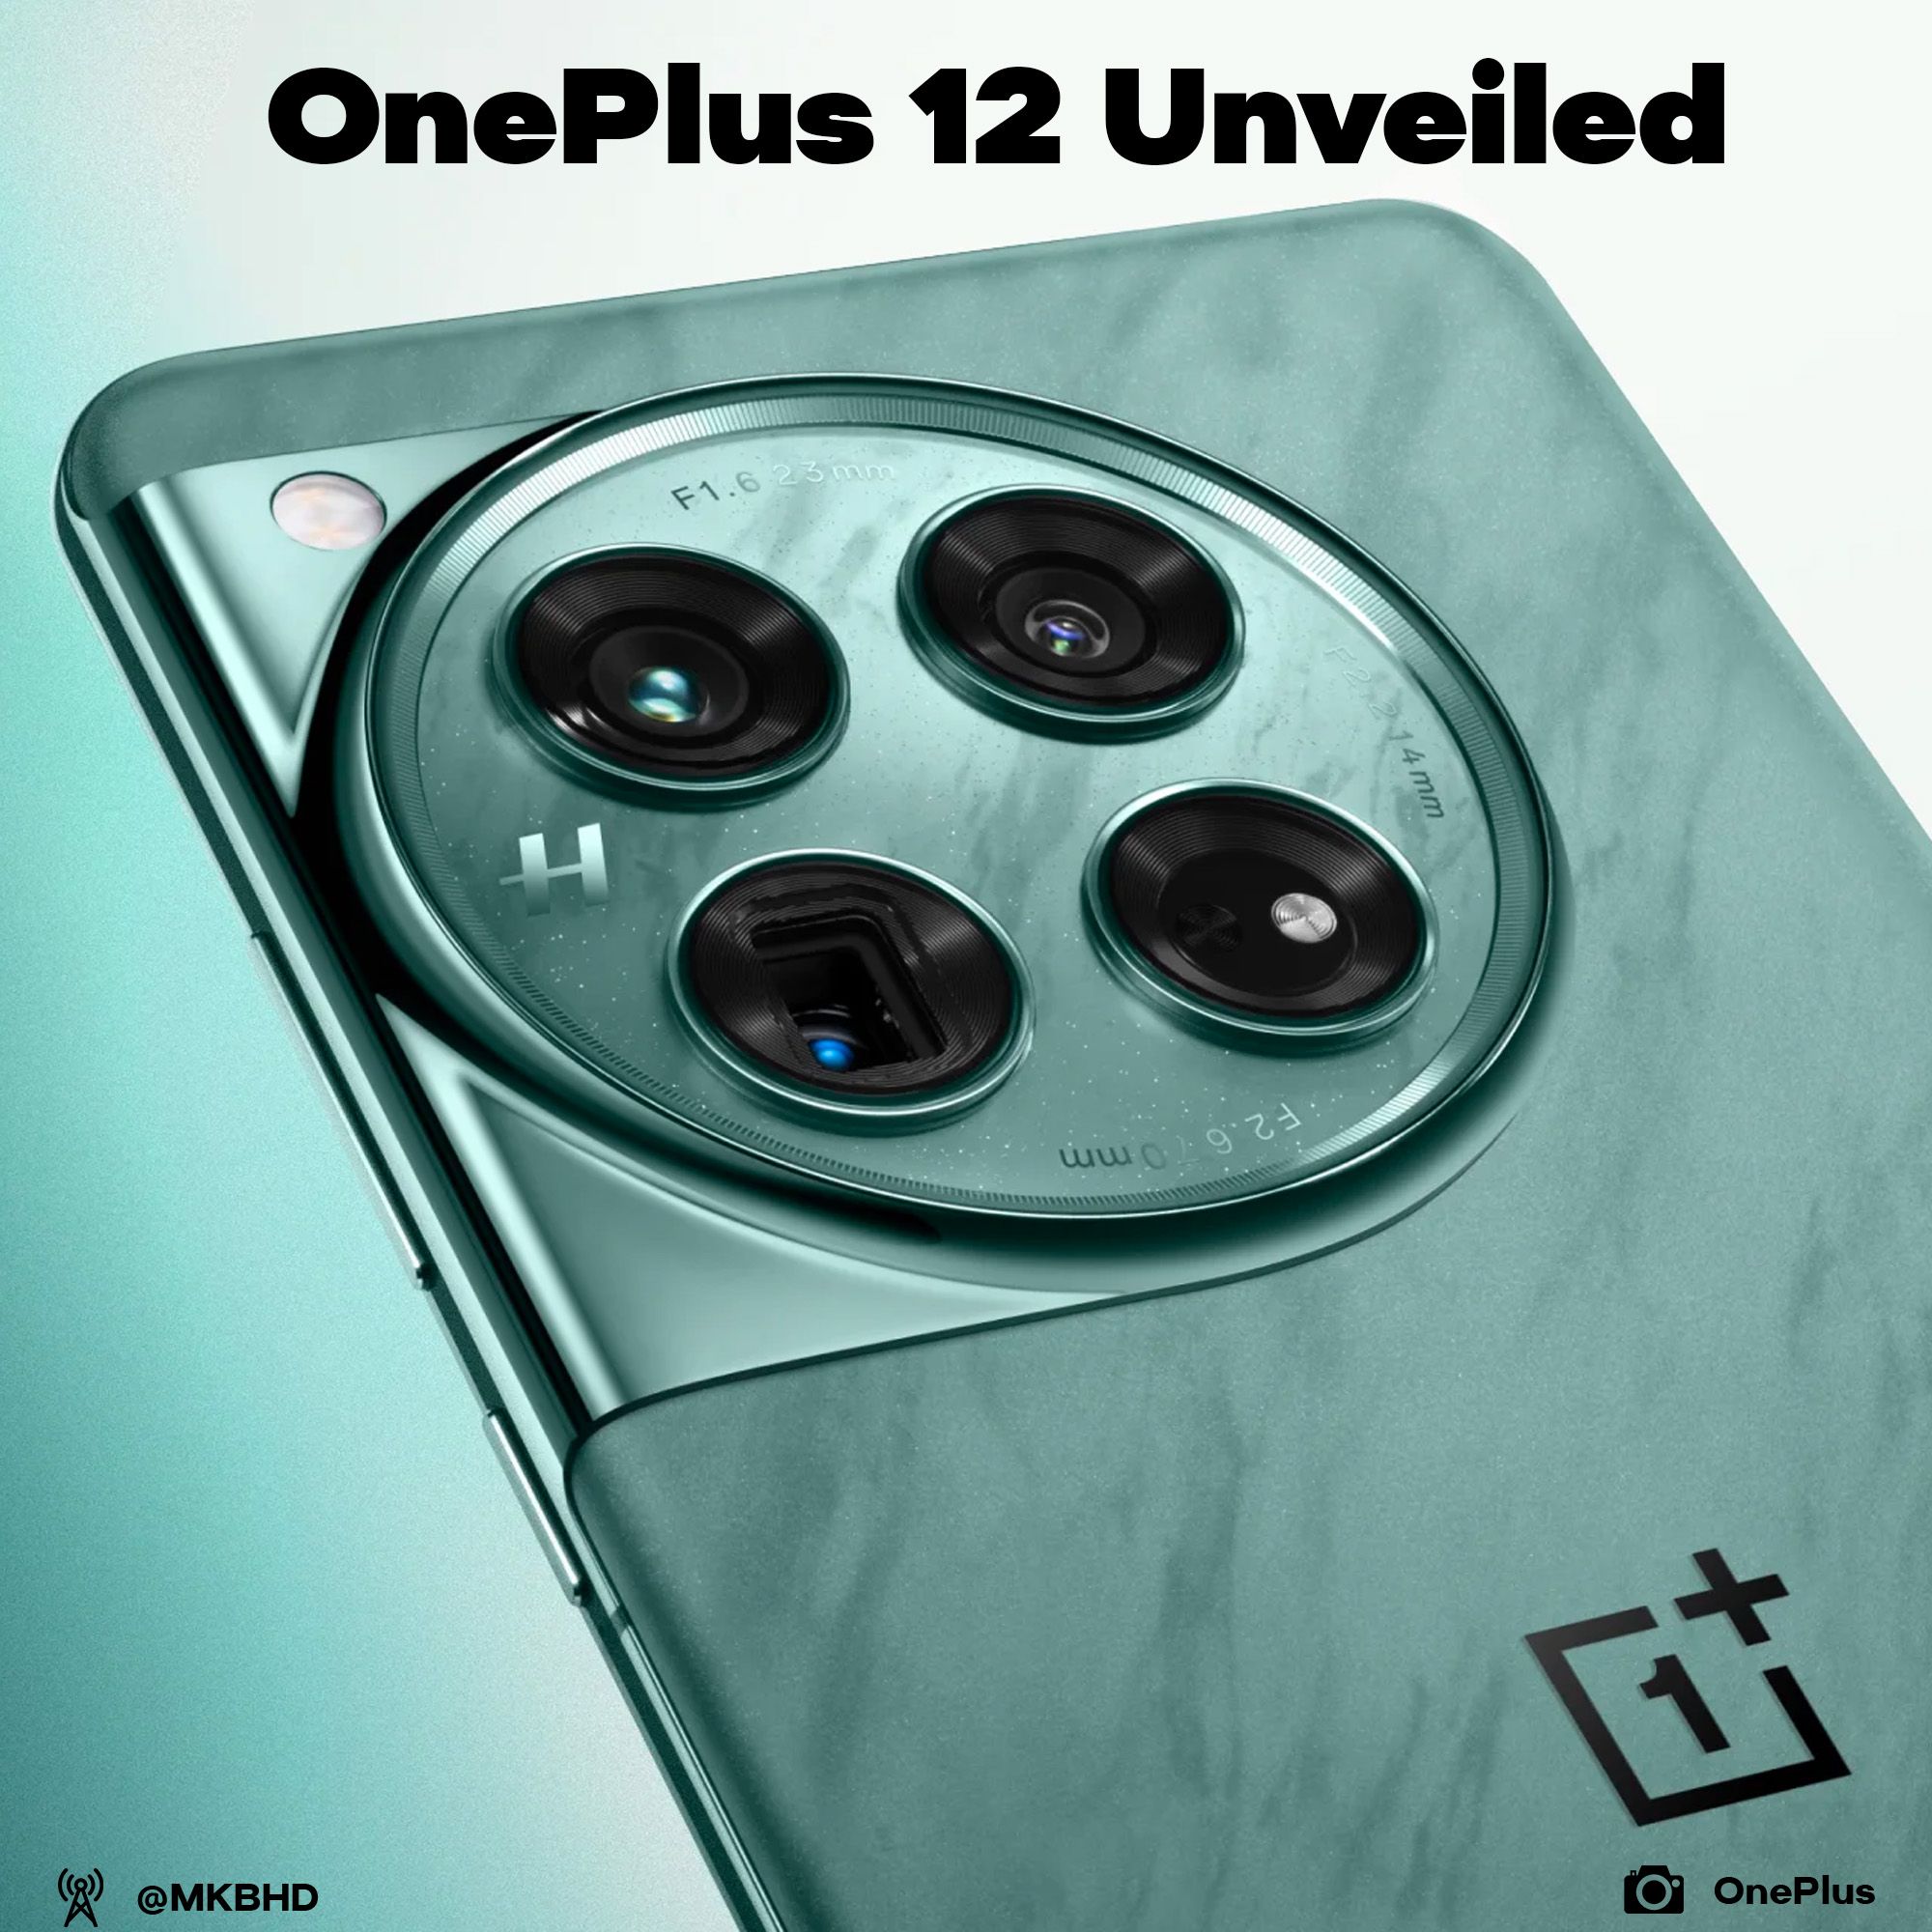 OnePlus 12 unveiled